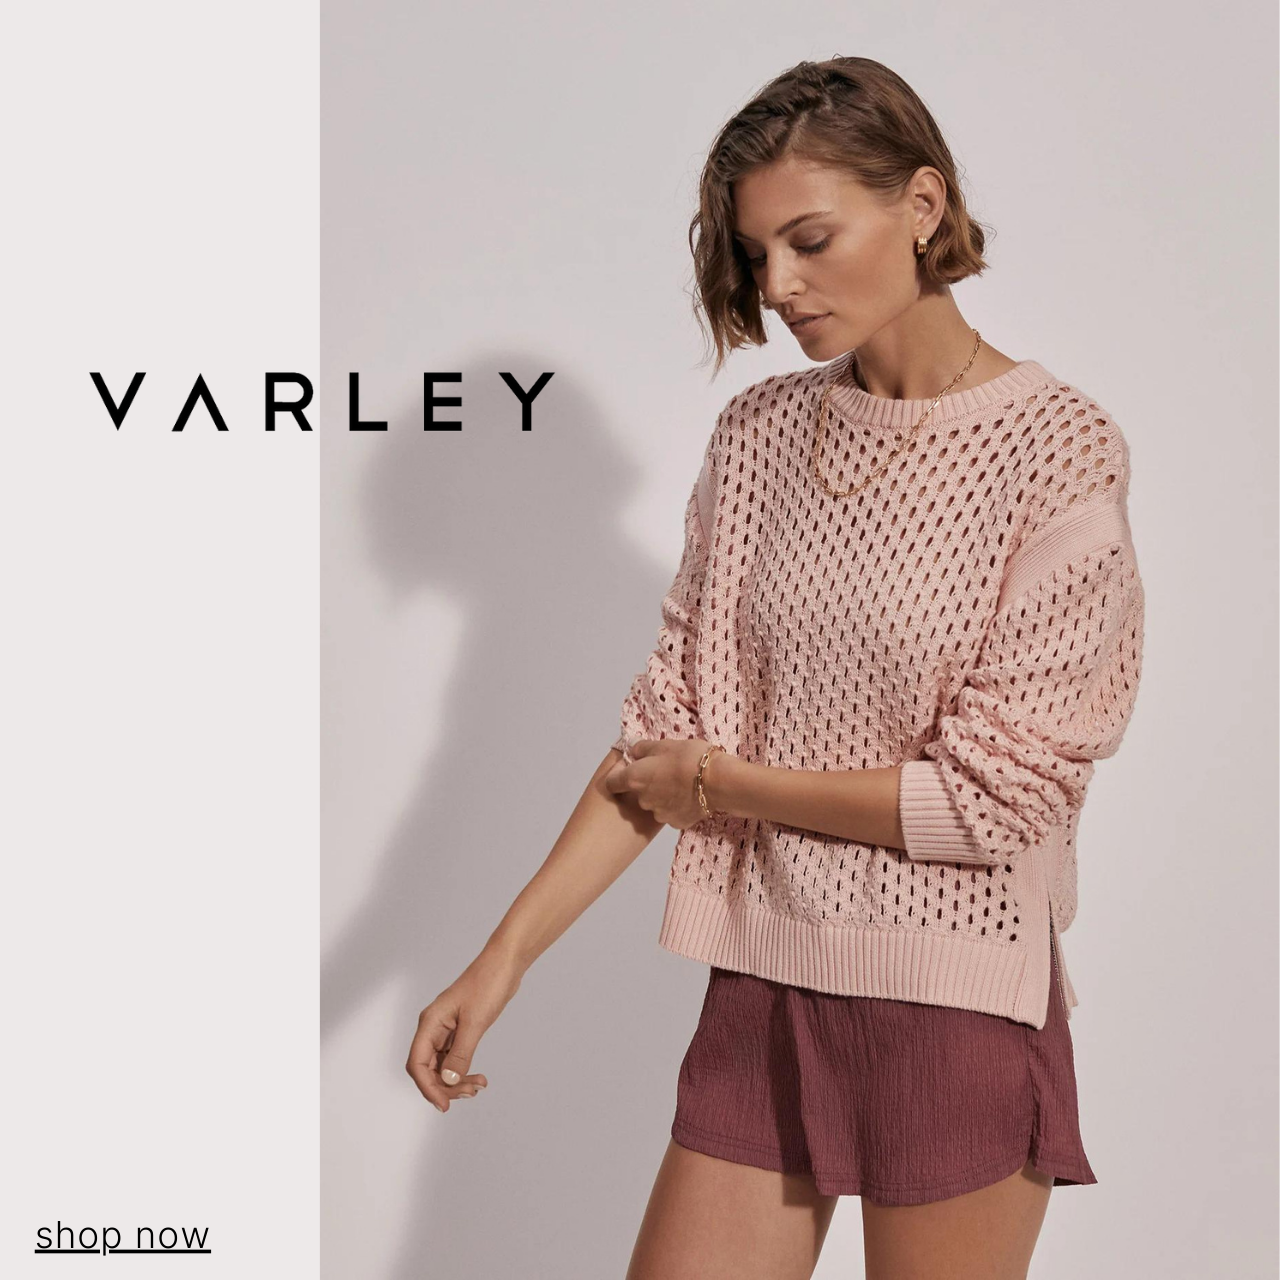 Grace Veranda – Sensory Clothes for Sensory People of All Sizes